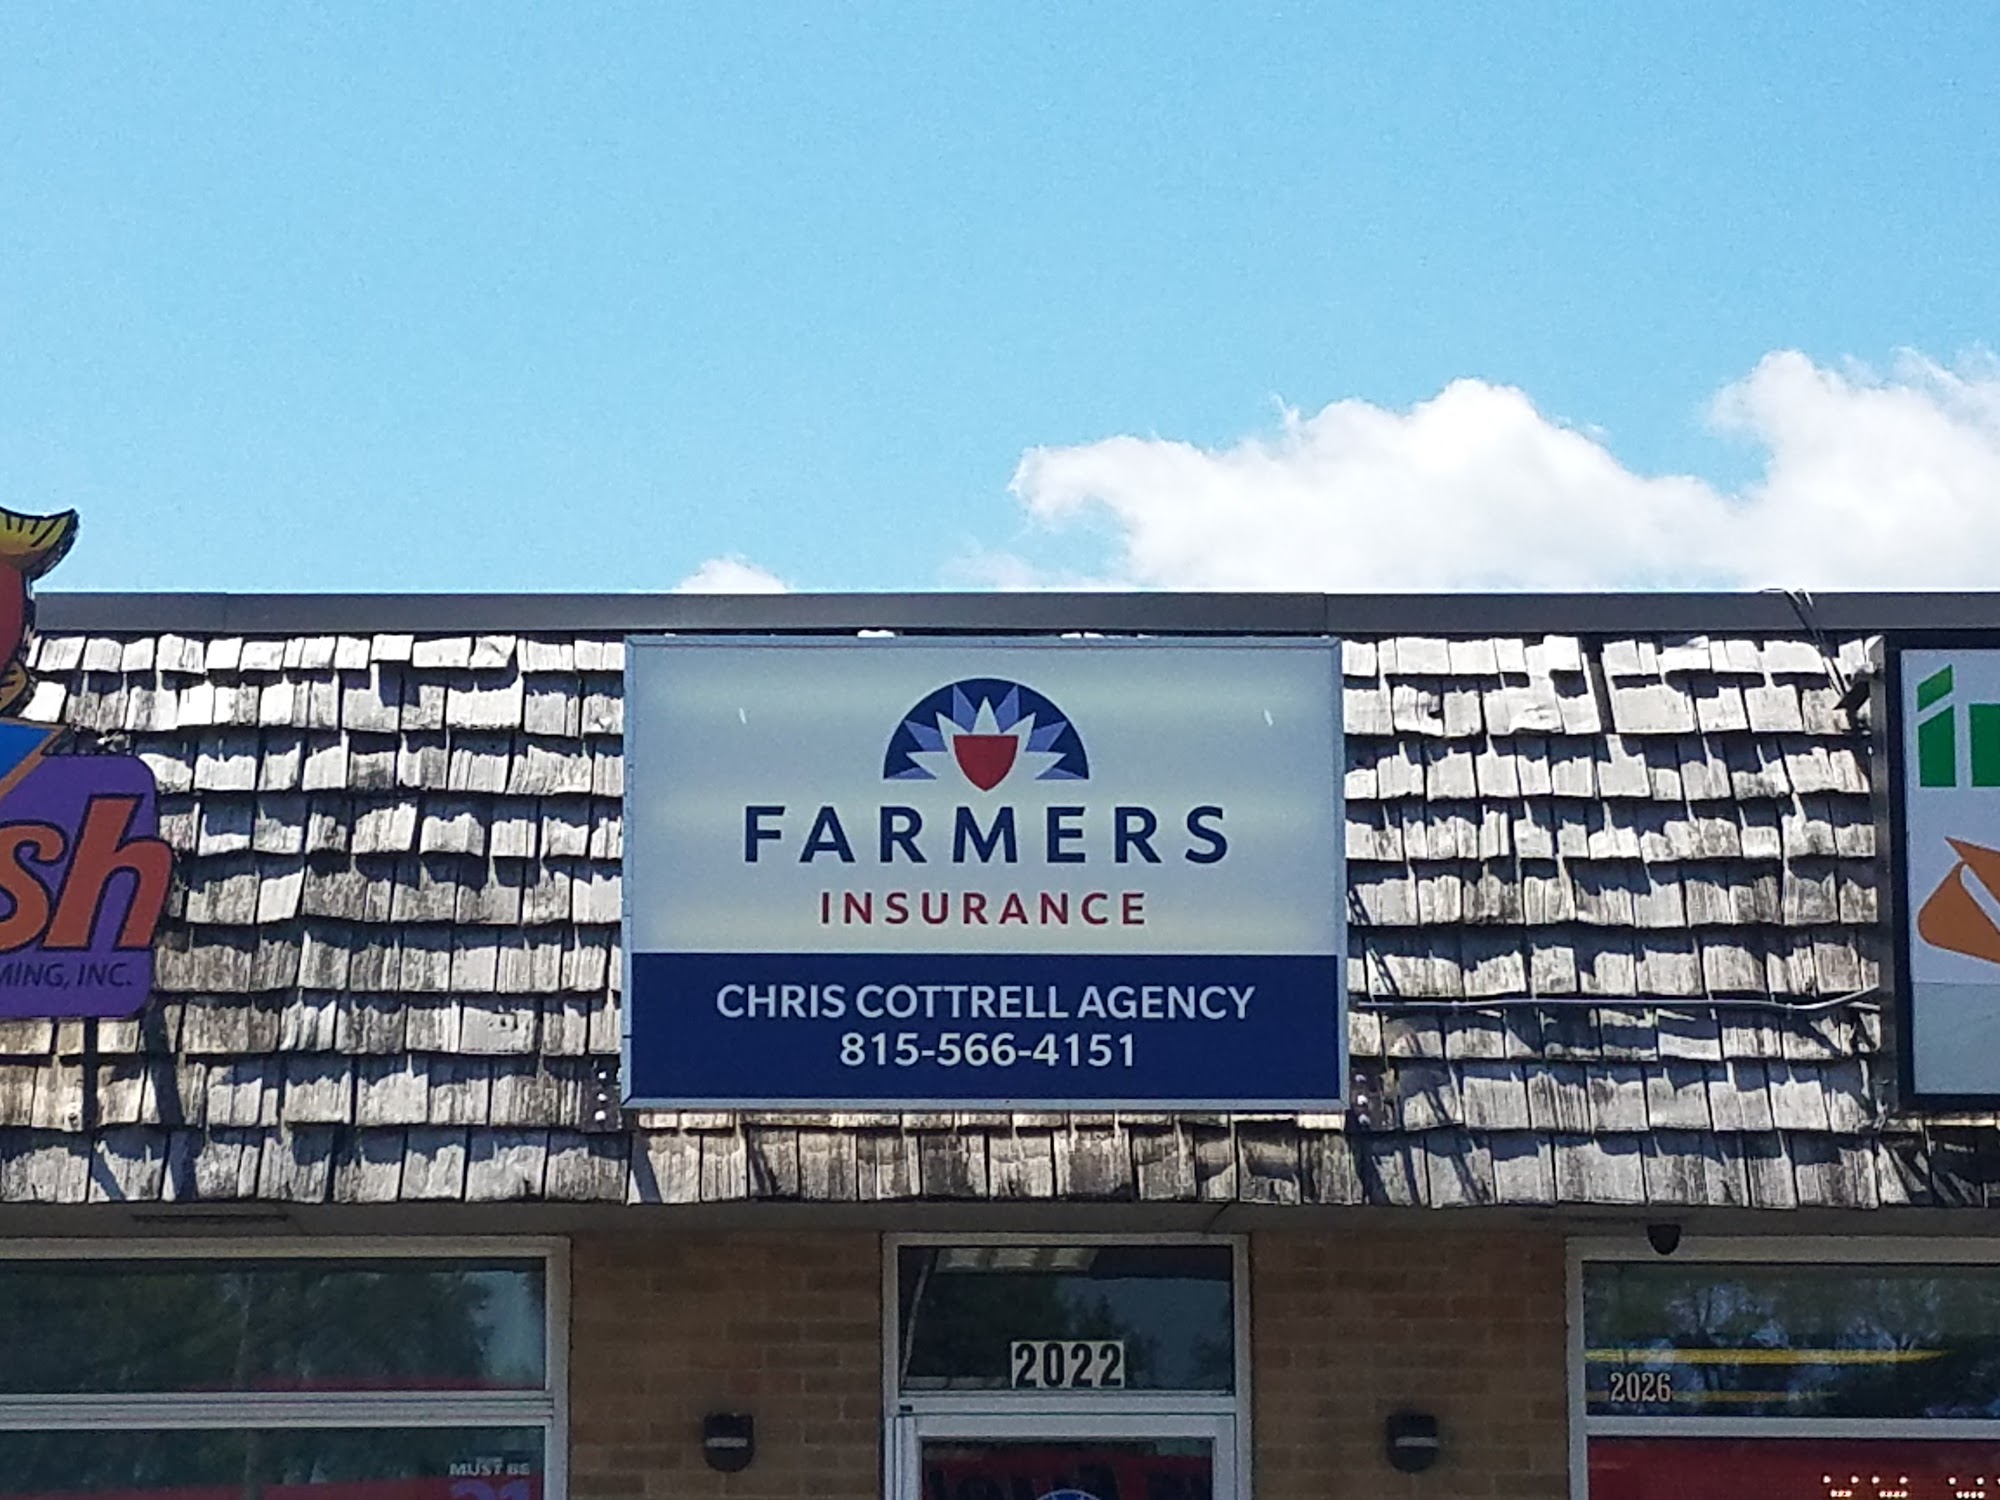 Farmers Insurance - Christopher Cottrell